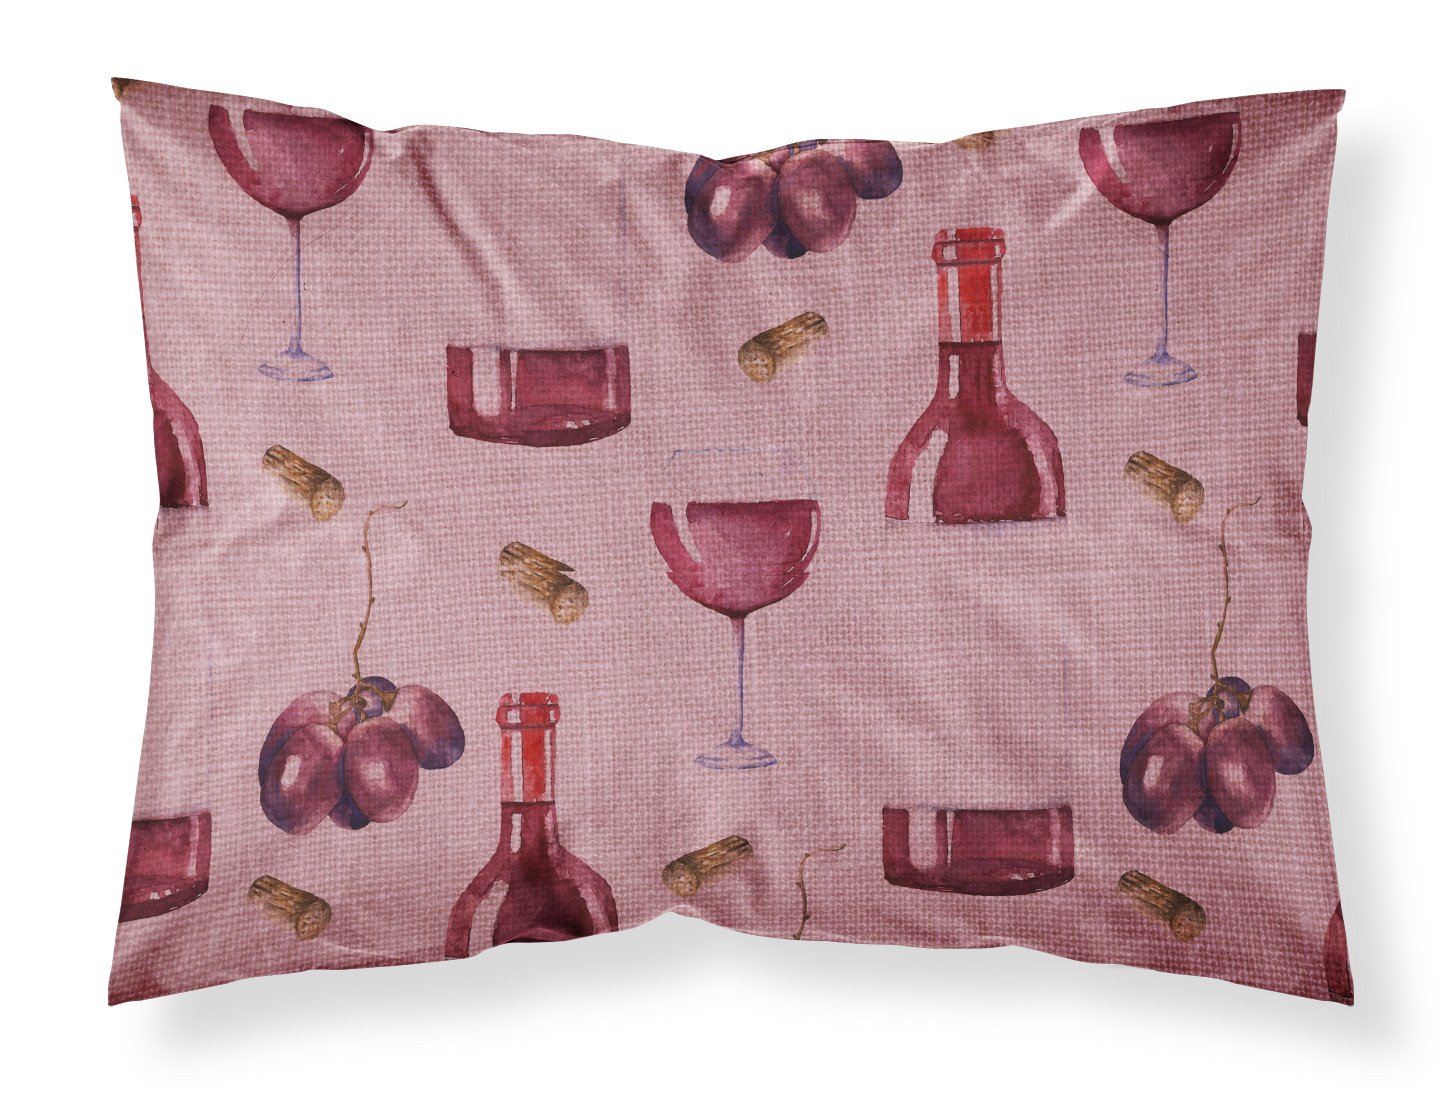 Red Wine on Linen Fabric Standard Pillowcase BB5195PILLOWCASE by Caroline's Treasures